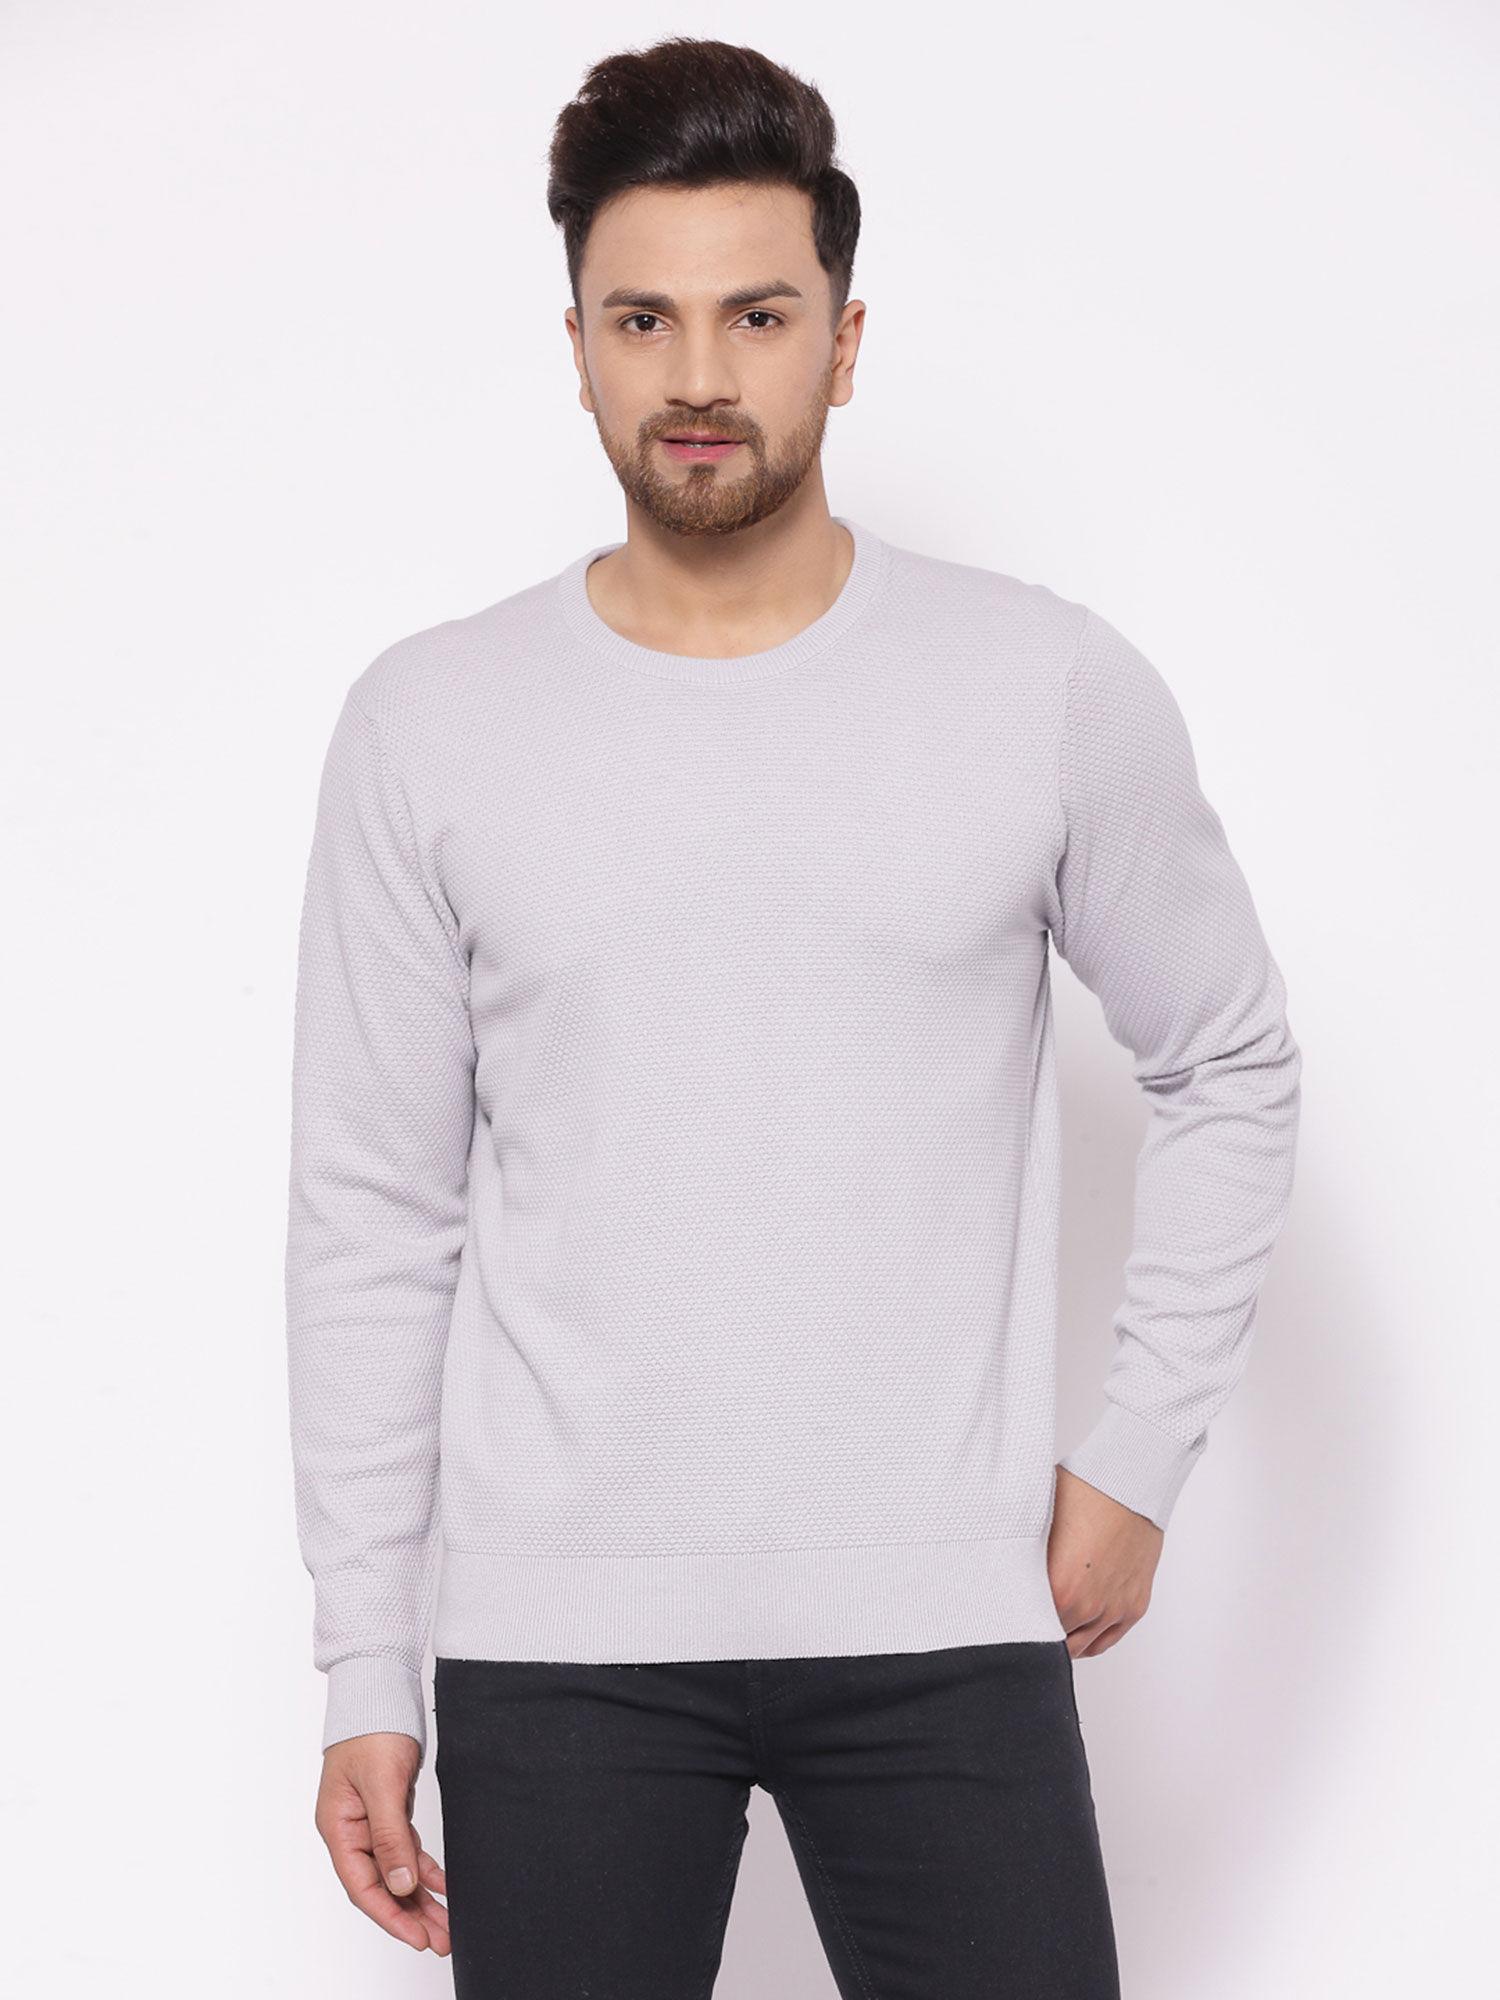 mens grey sweater